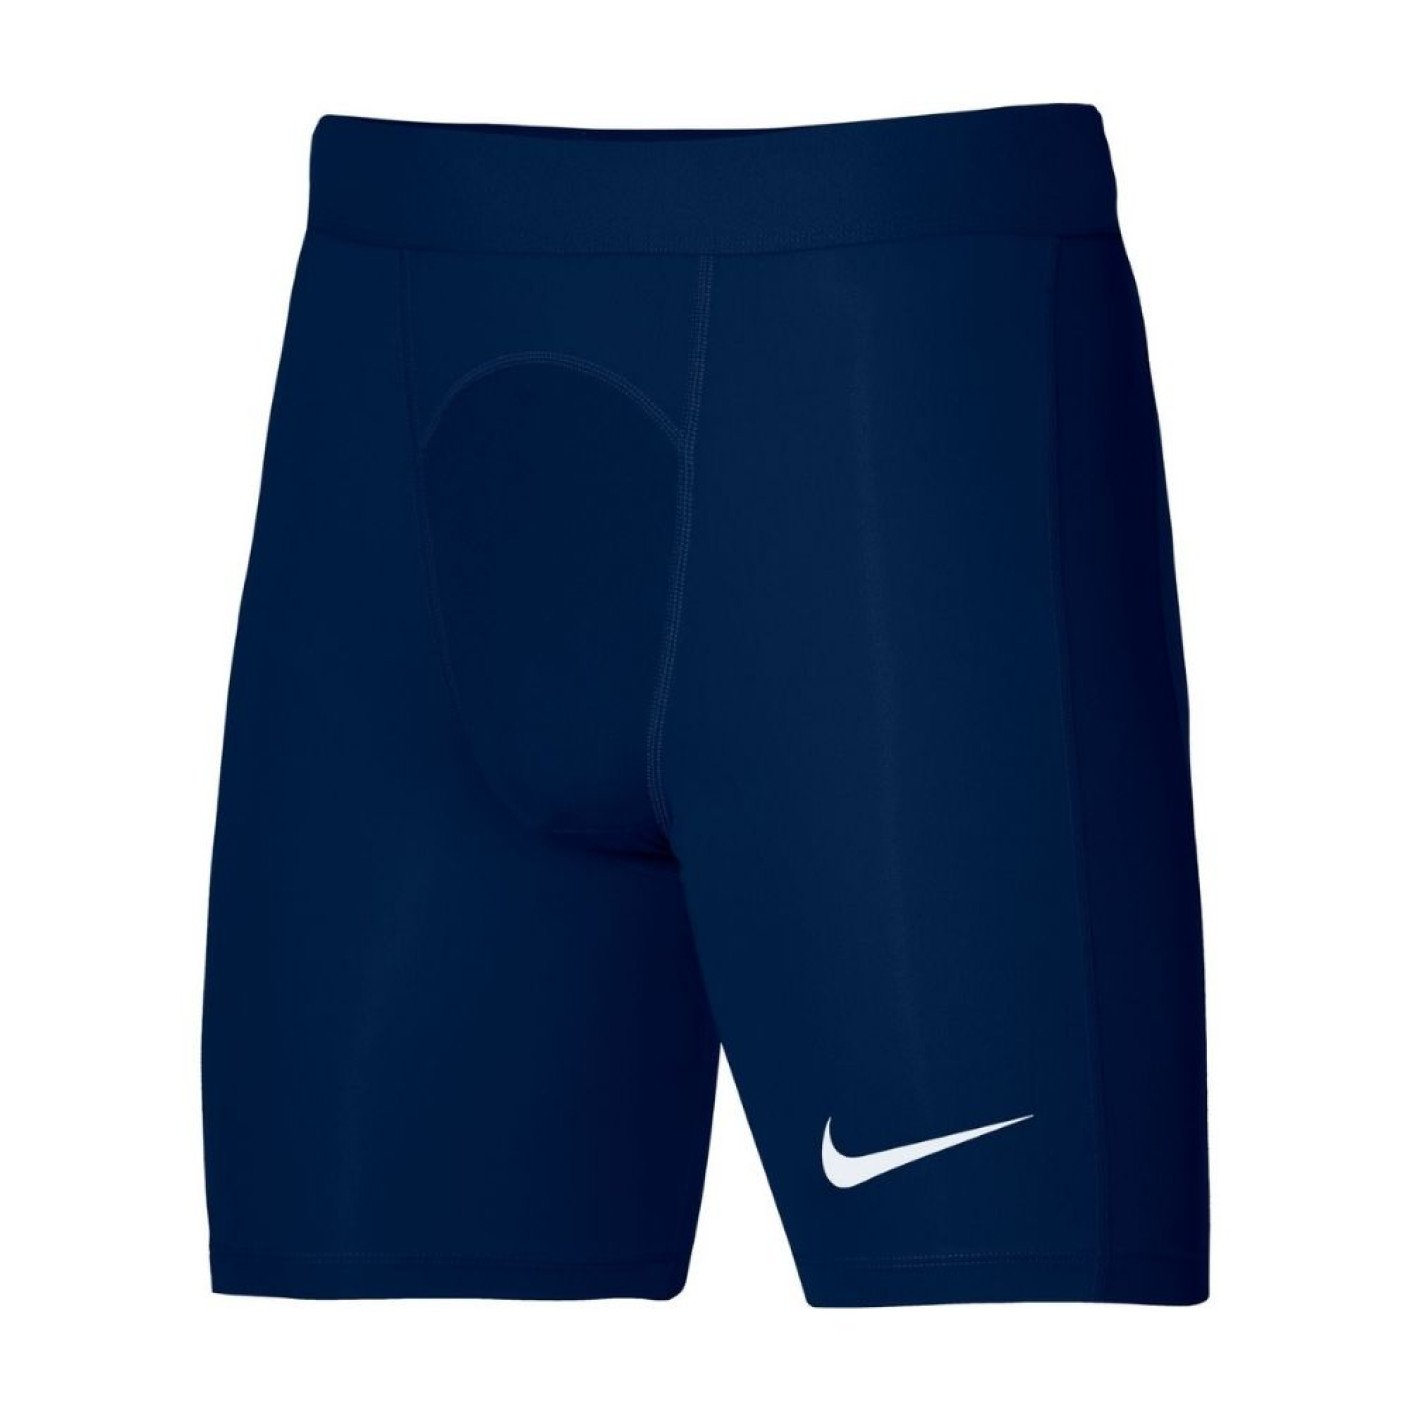 Nike Pro Combat Slider Baseball Shorts Men's Athletic Sports Wear  Compression | eBay